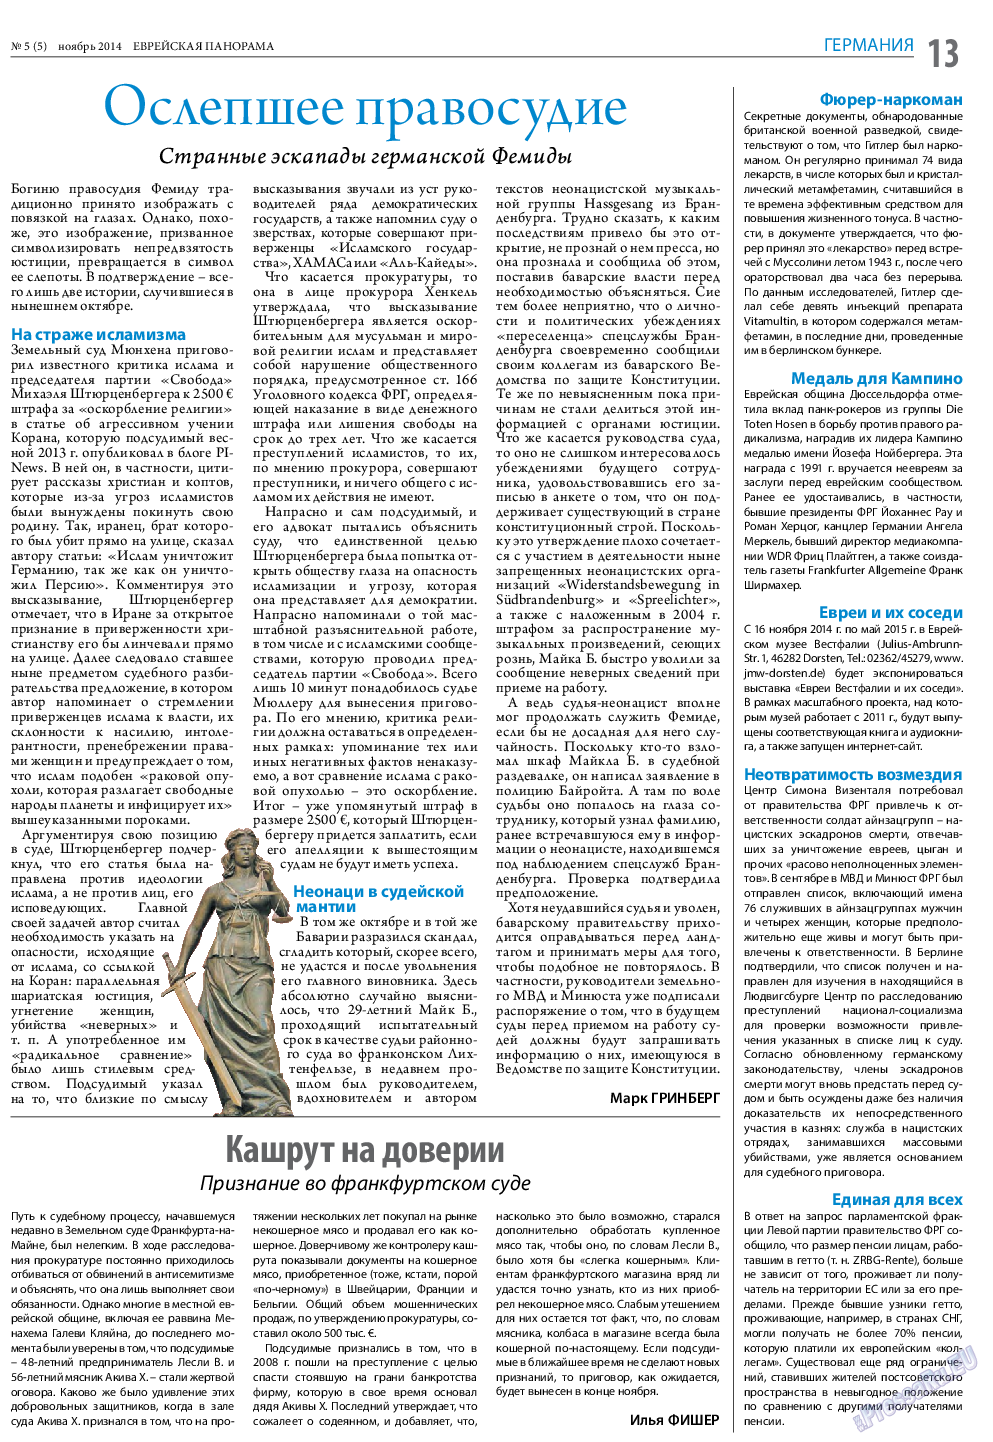 Еврейская панорама, газета. 2014 №5 стр.13